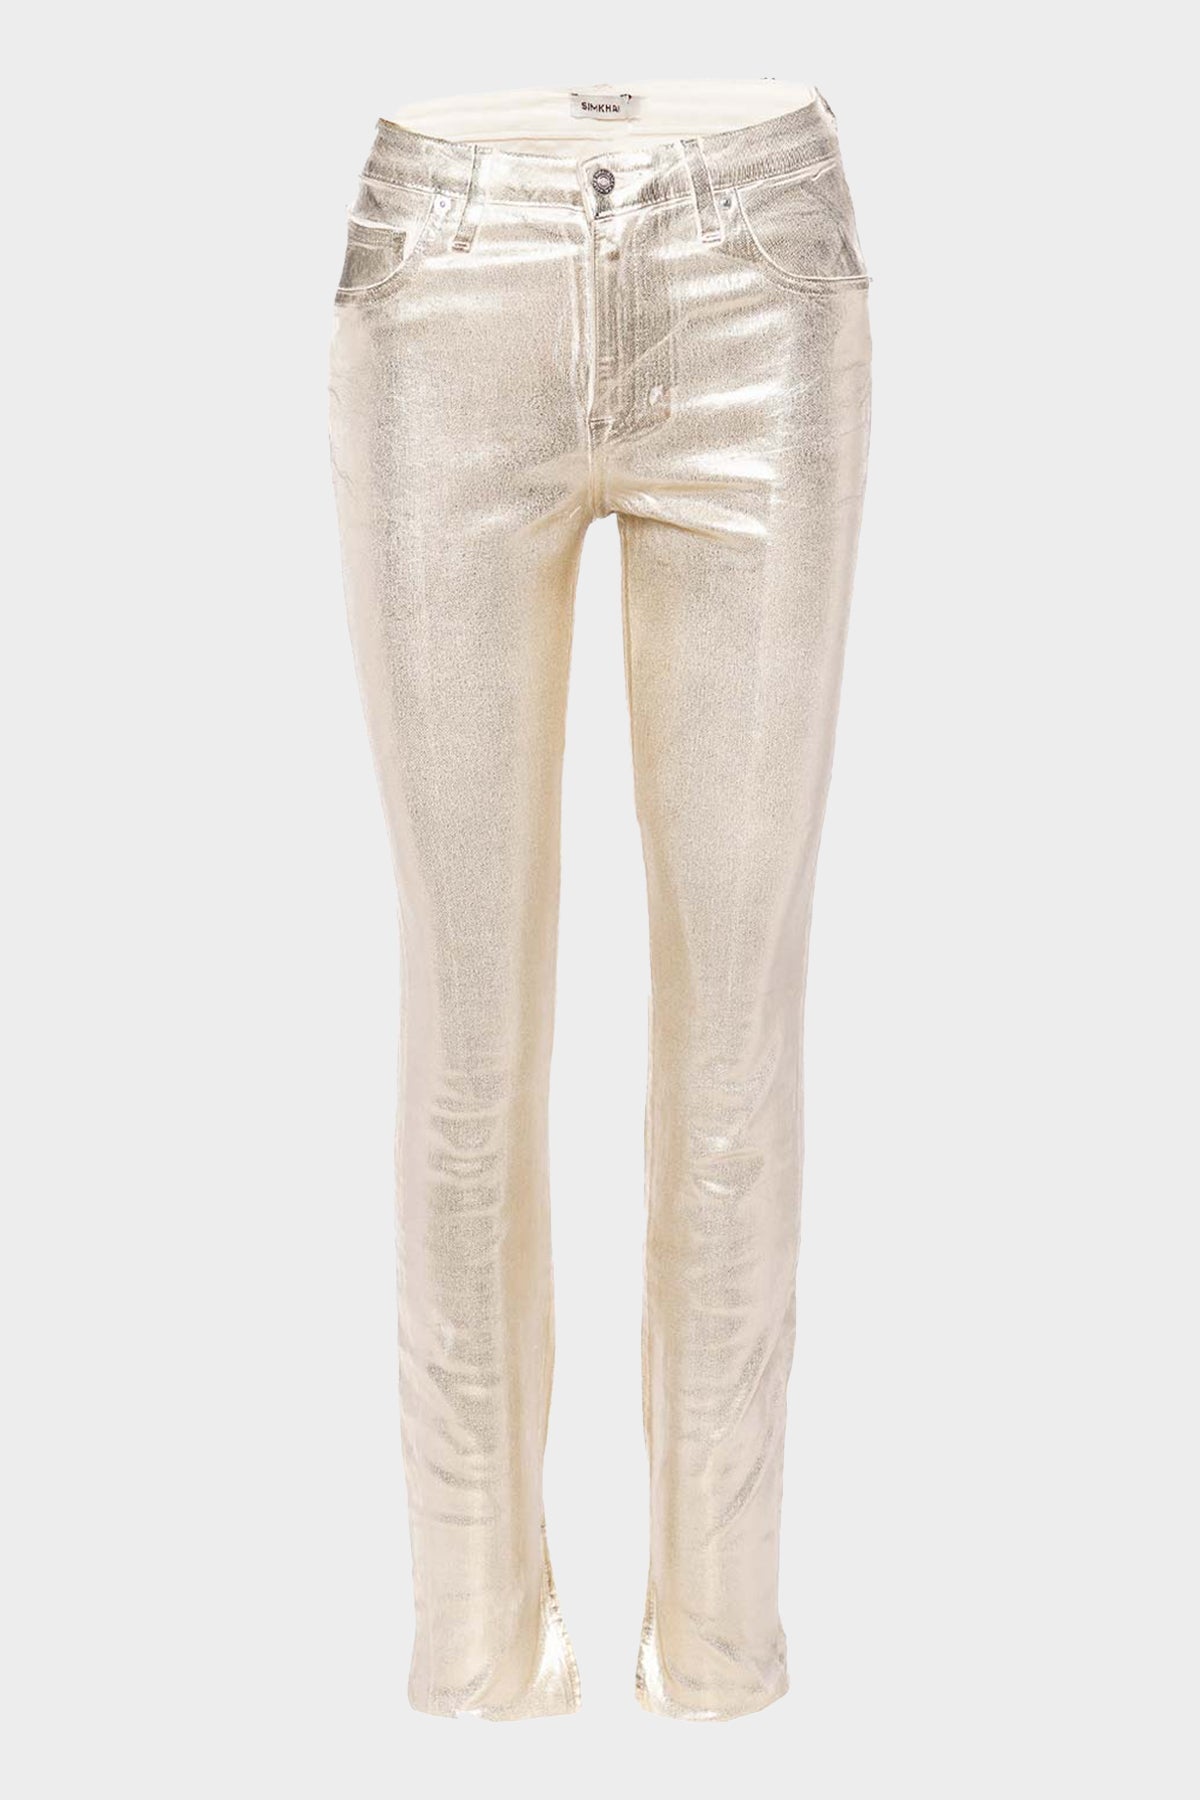 Rae High Rise Skinny Jean in Gold Foil - shop-olivia.com